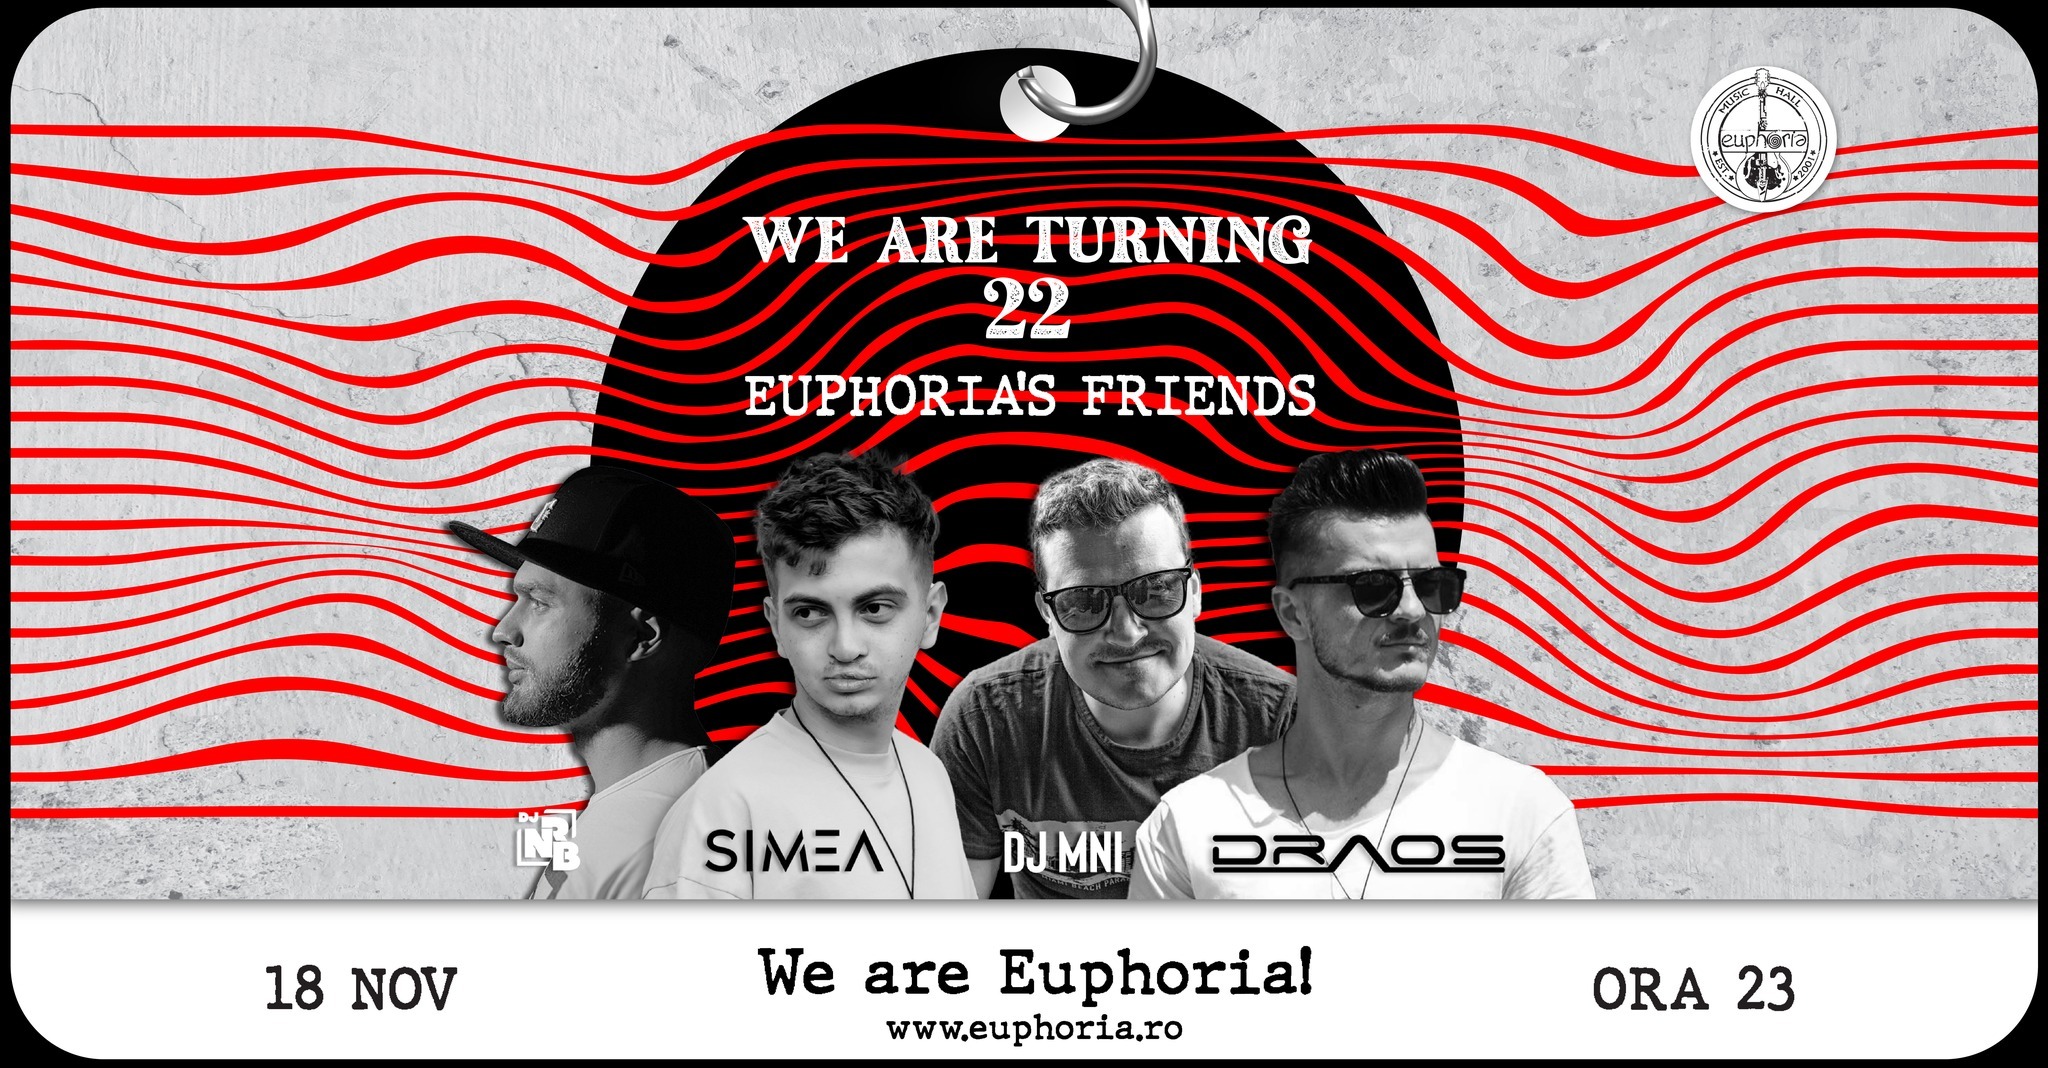 Euphoria's Friends with Simea, DJ Mni, Draos, DJ NRB